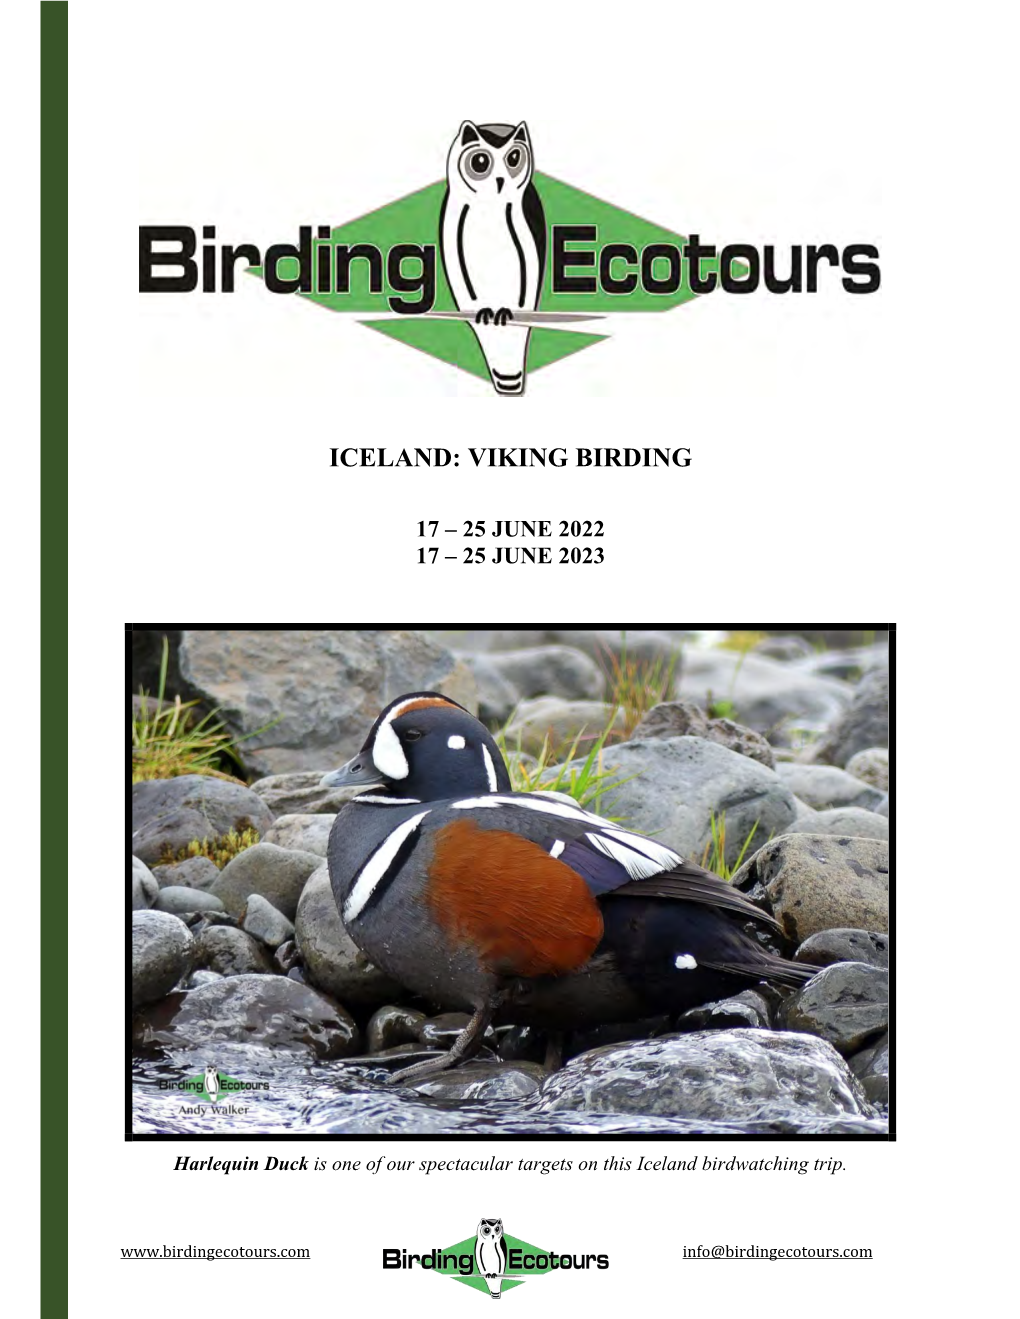 Iceland: Viking Birding